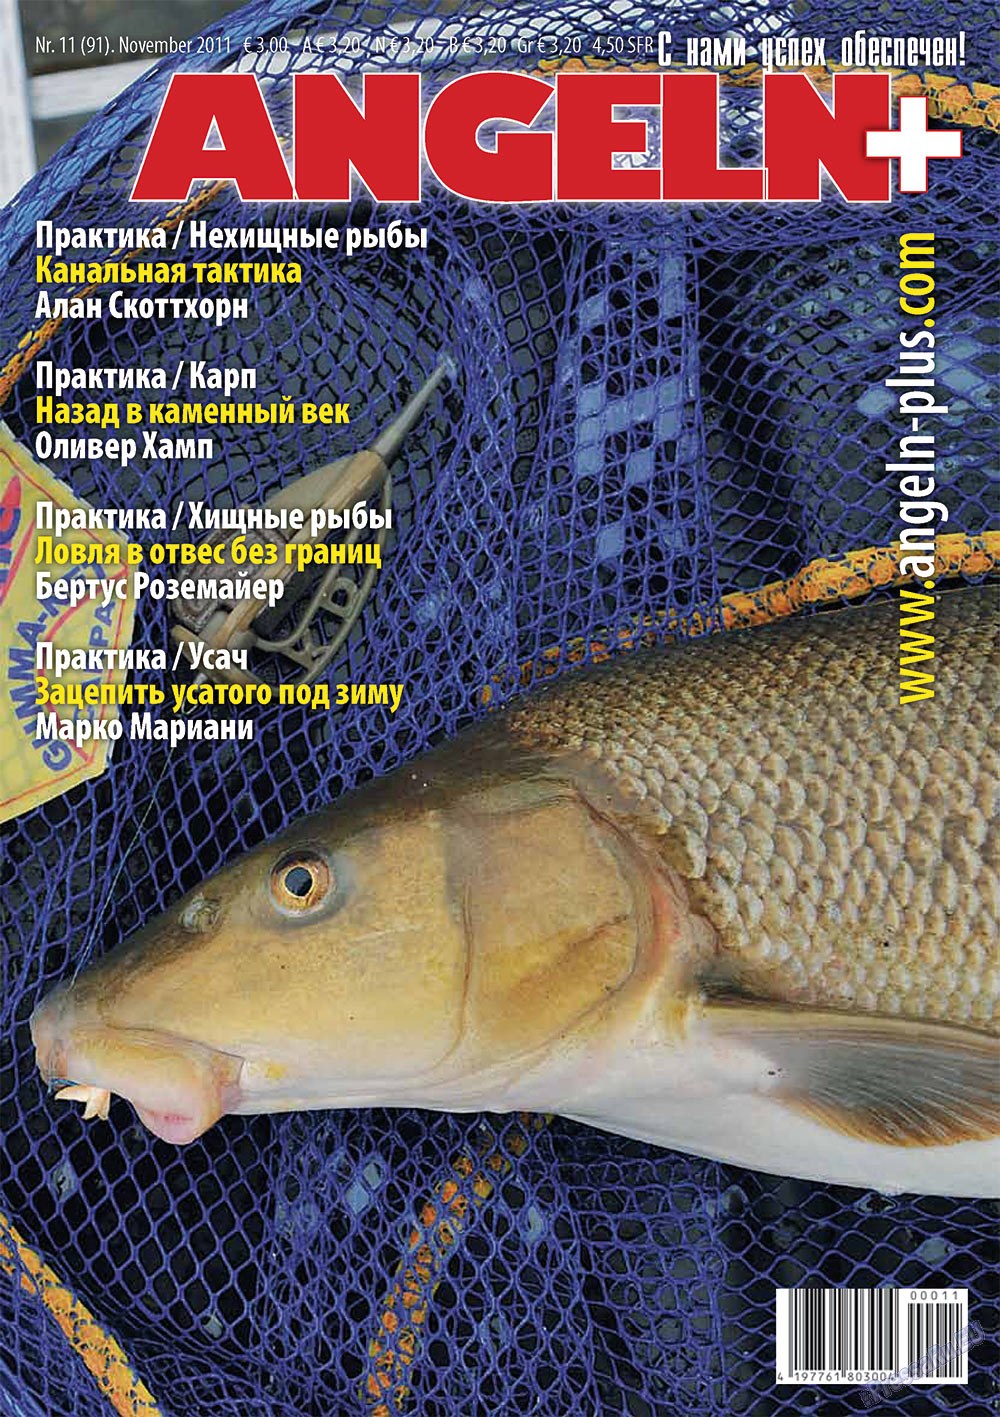 Рыбалка Plus (журнал). 2011 год, номер 11, стр. 1